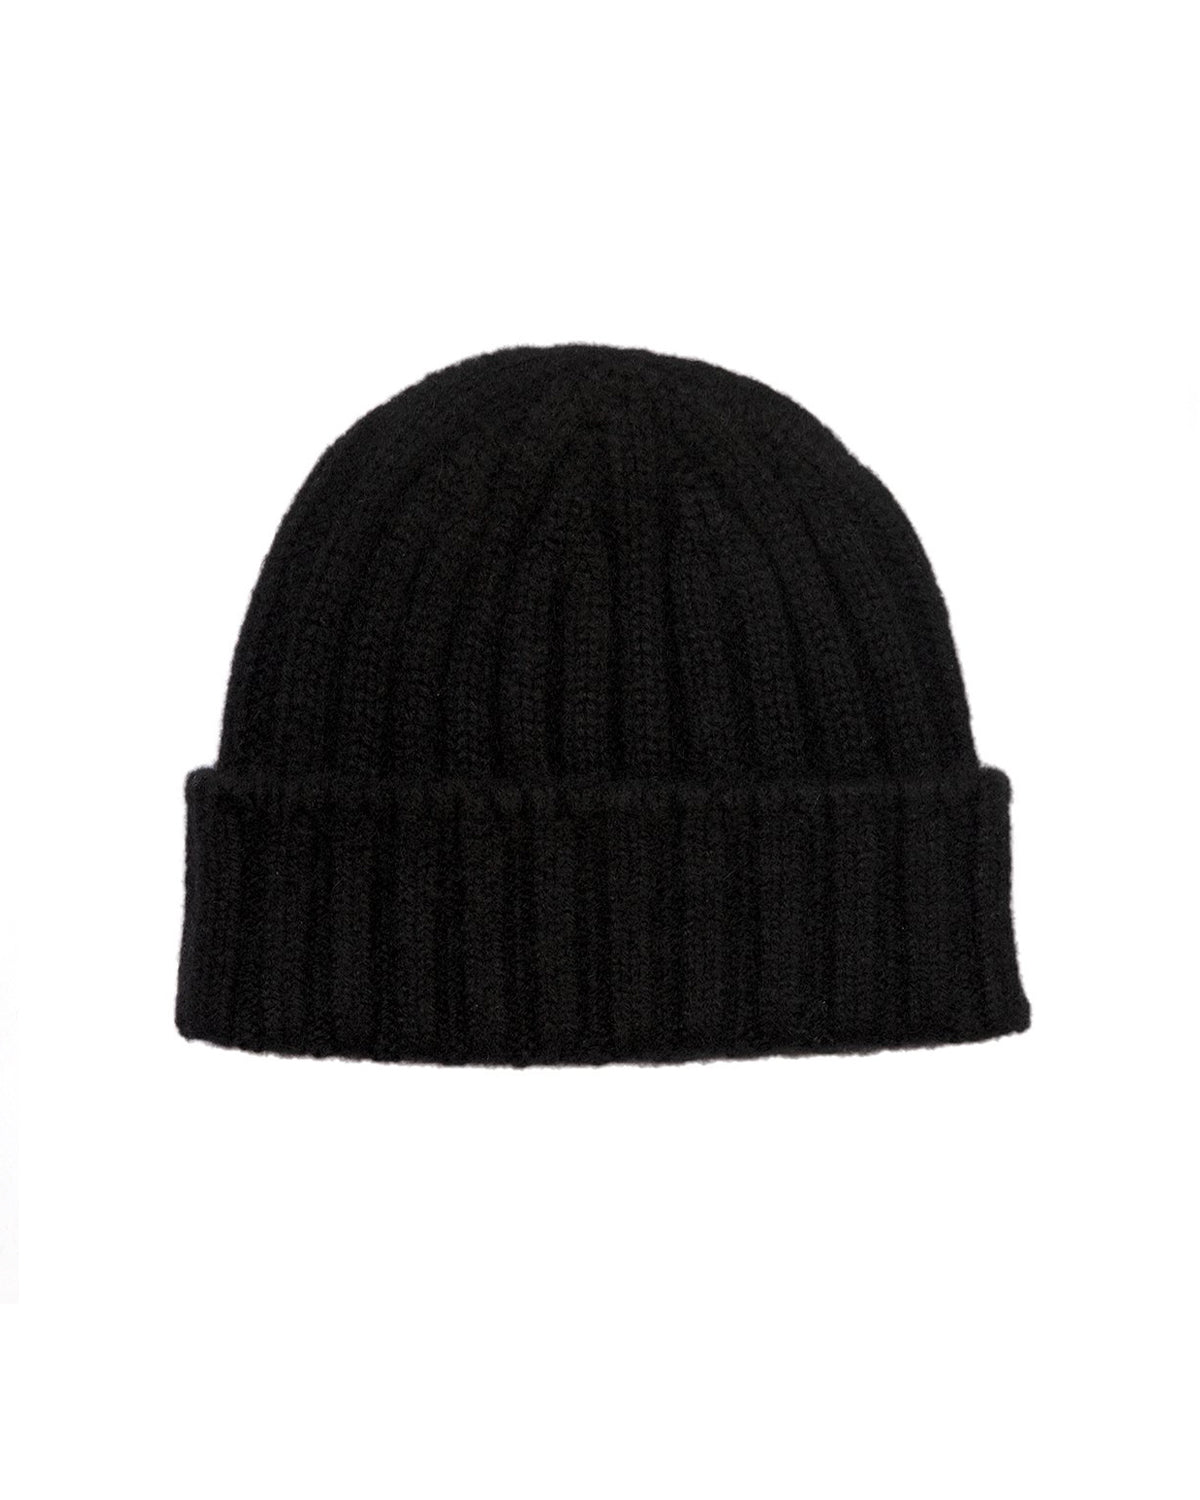 Knit Cap in Cashmere 2x2 Rib - Black